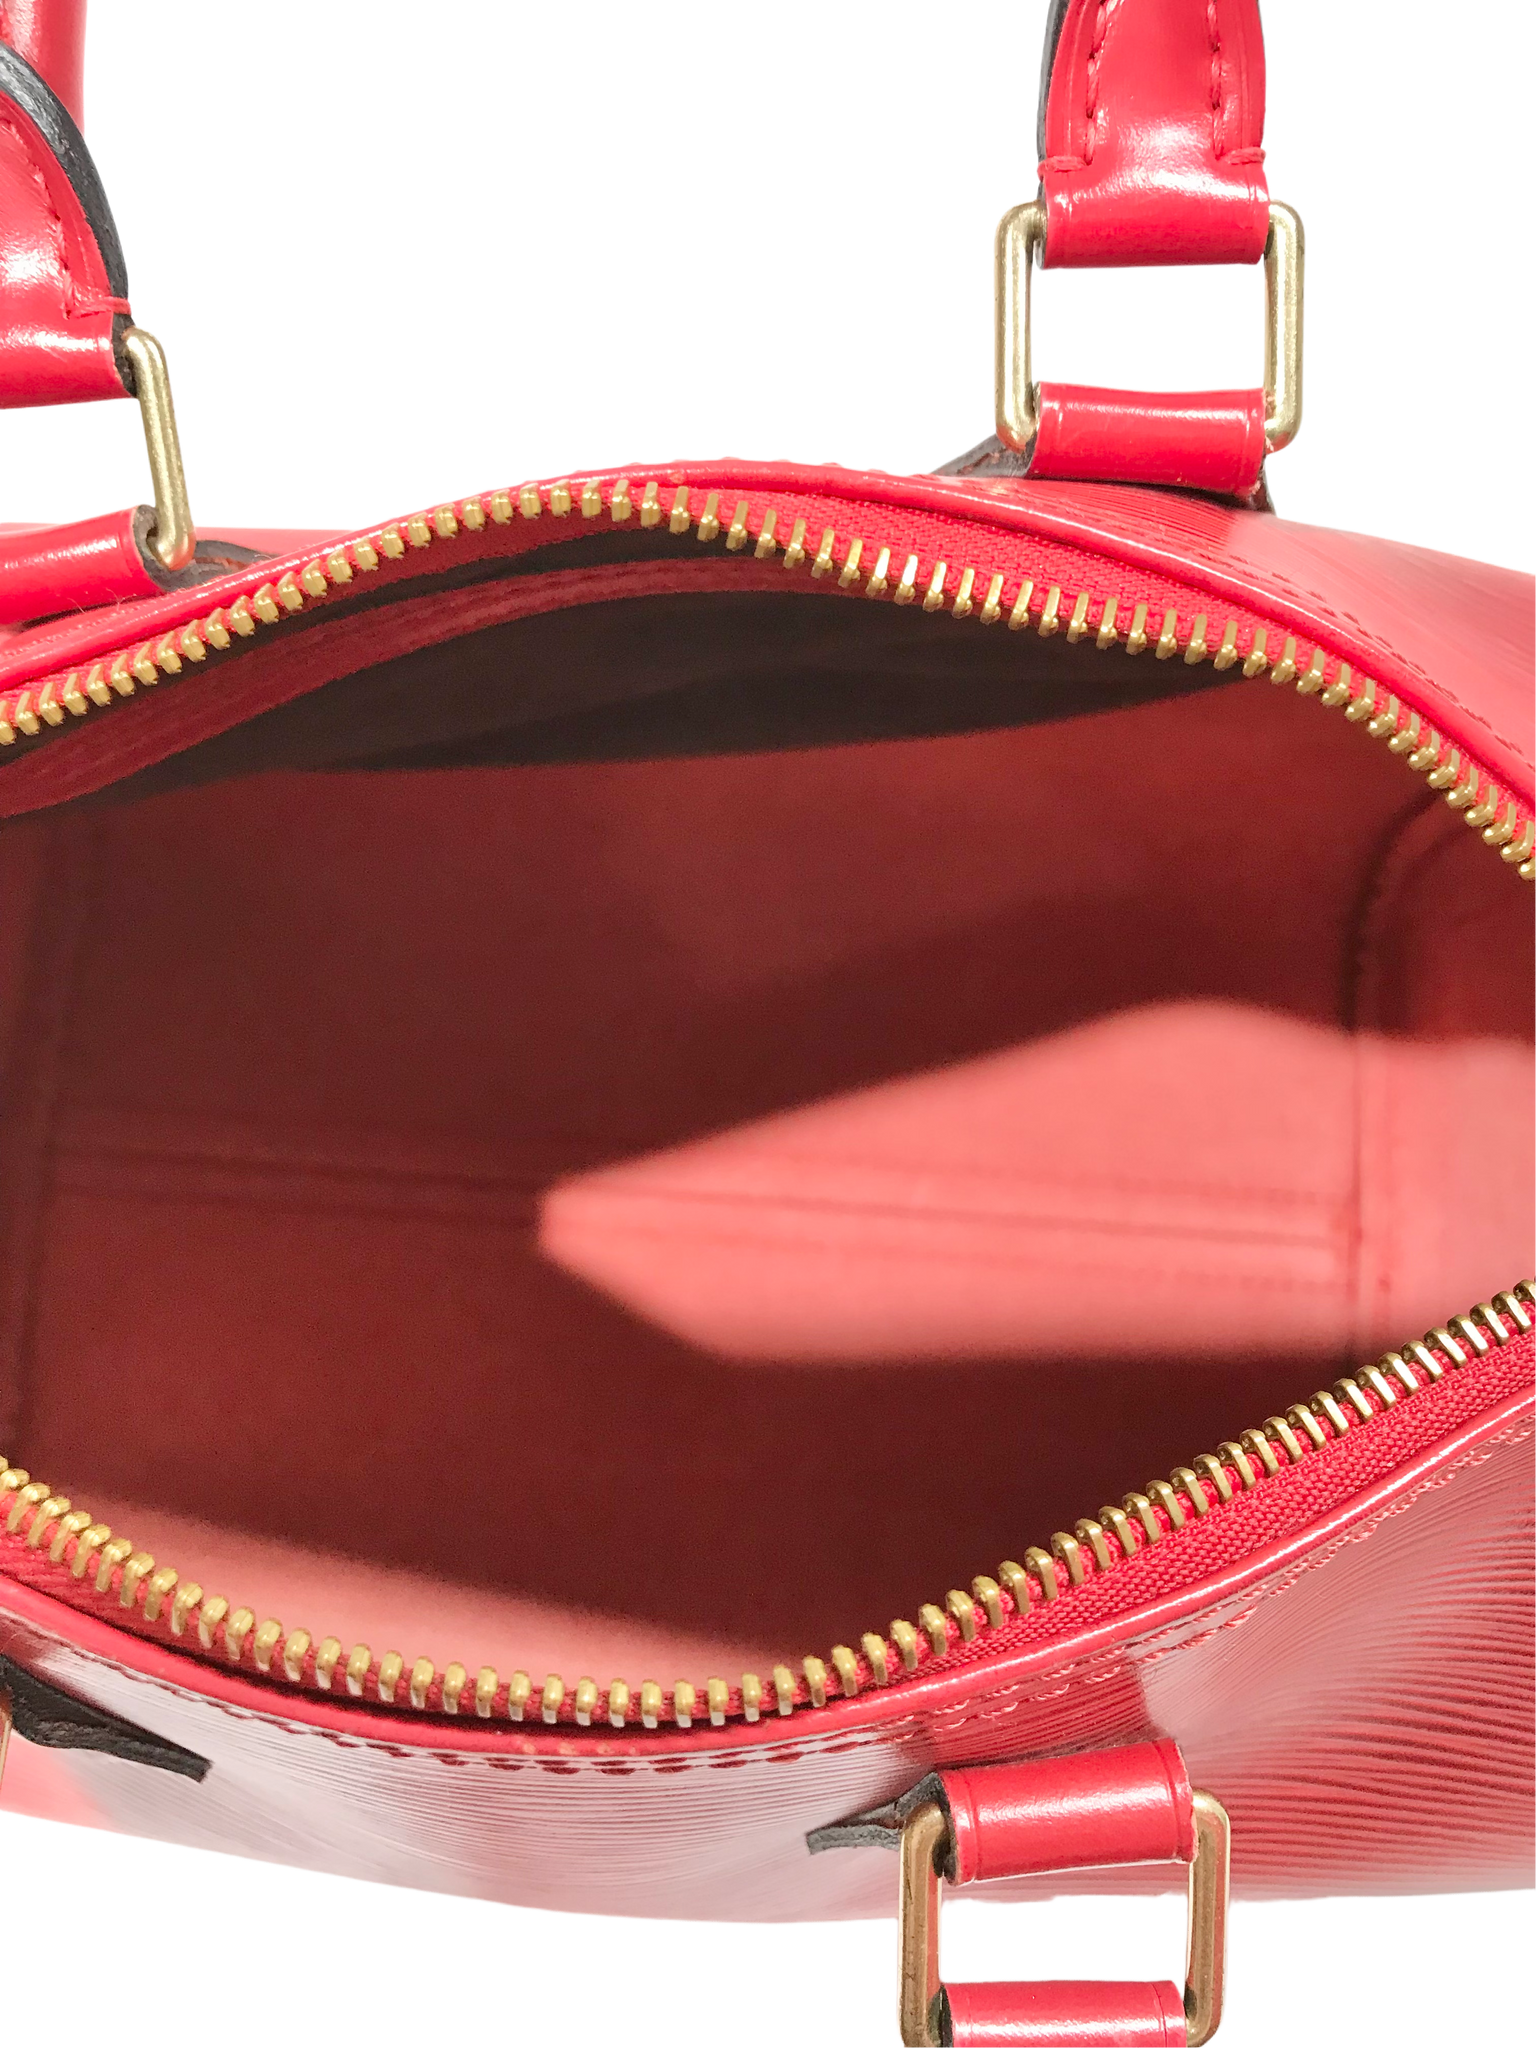 Louis Vuitton Handbag Epi Speedy 25 Ladies M43017 Castilian Red